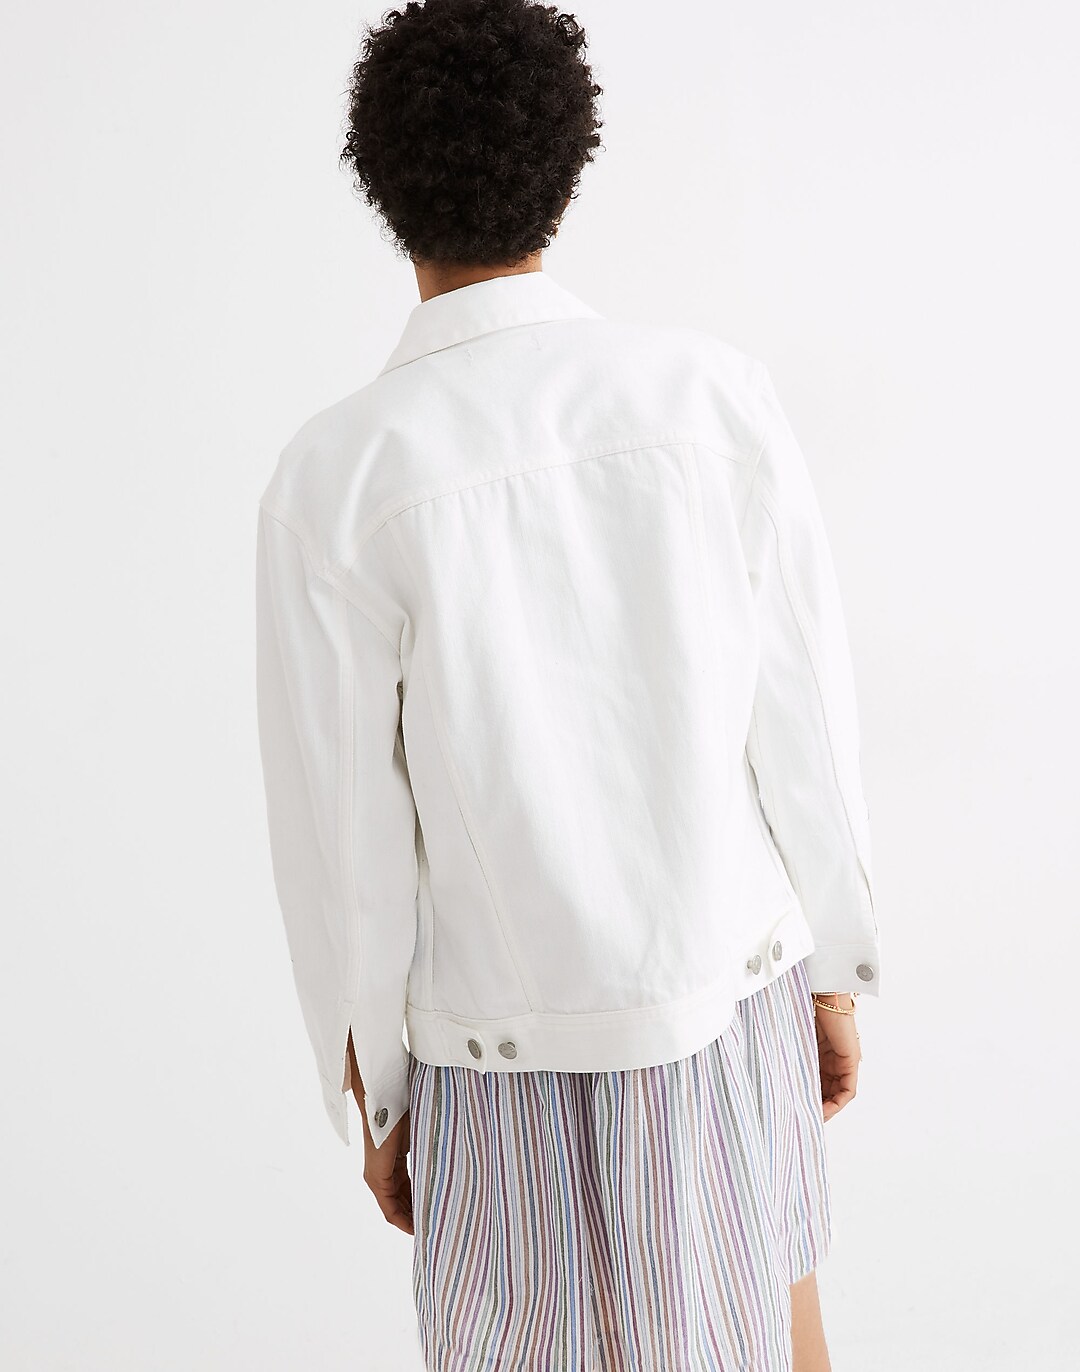 Madewell x APPRVL White Oversized Jean Jacket: Tie-Dye Edition